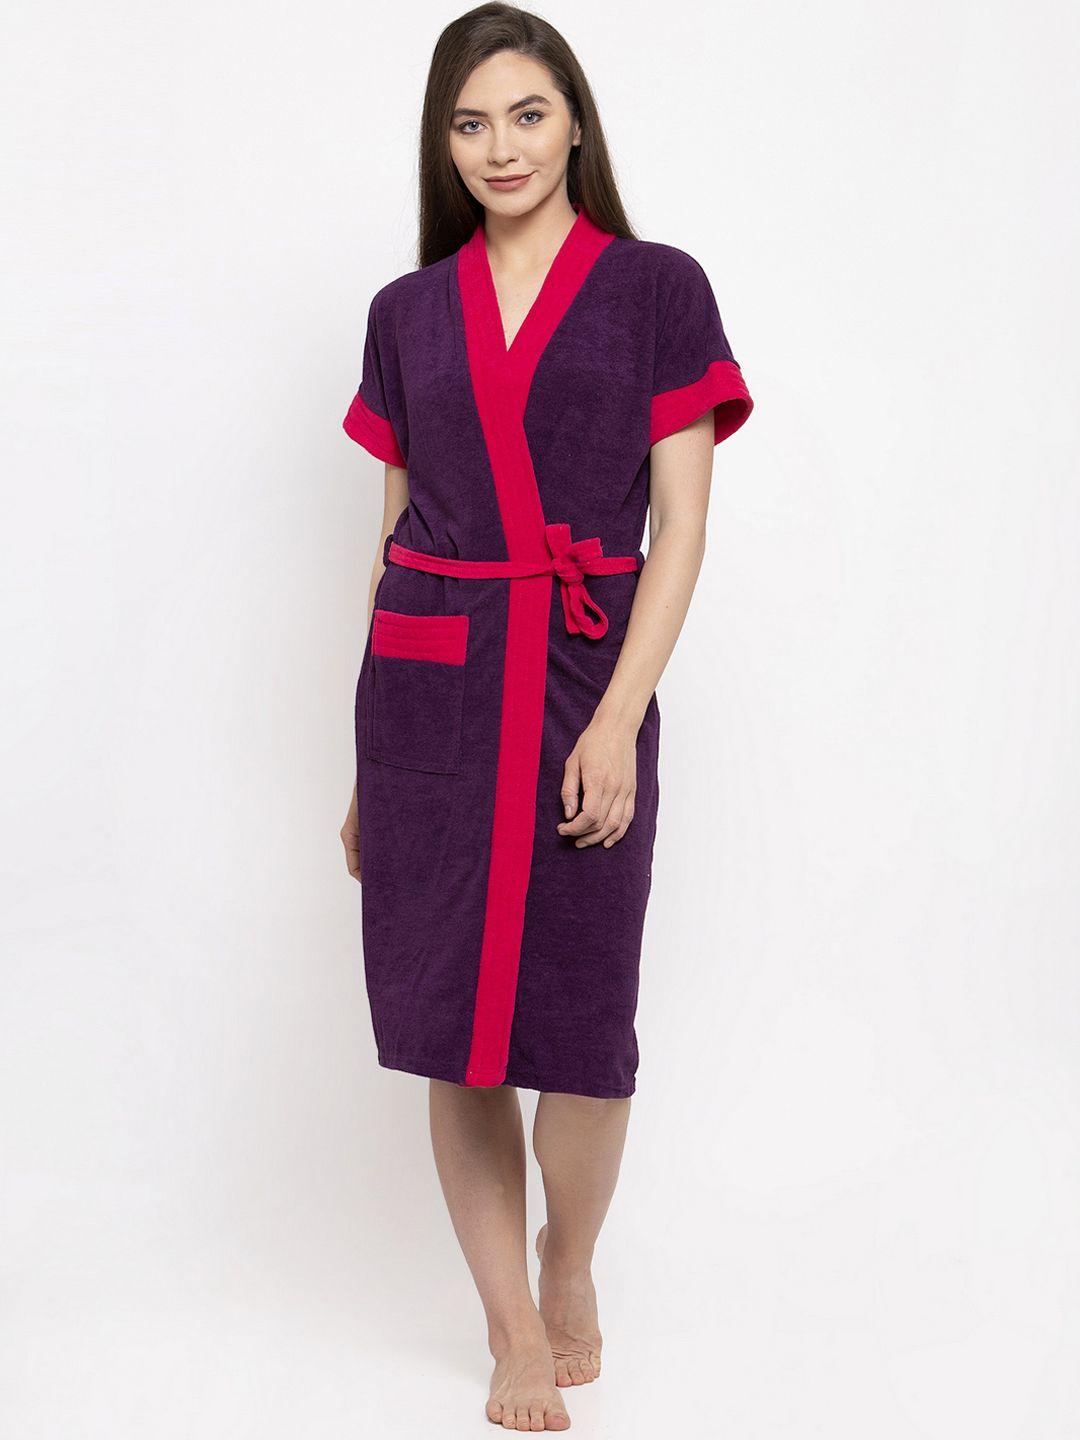 elevanto women purple & pink colourblocked bathmusic bath robe